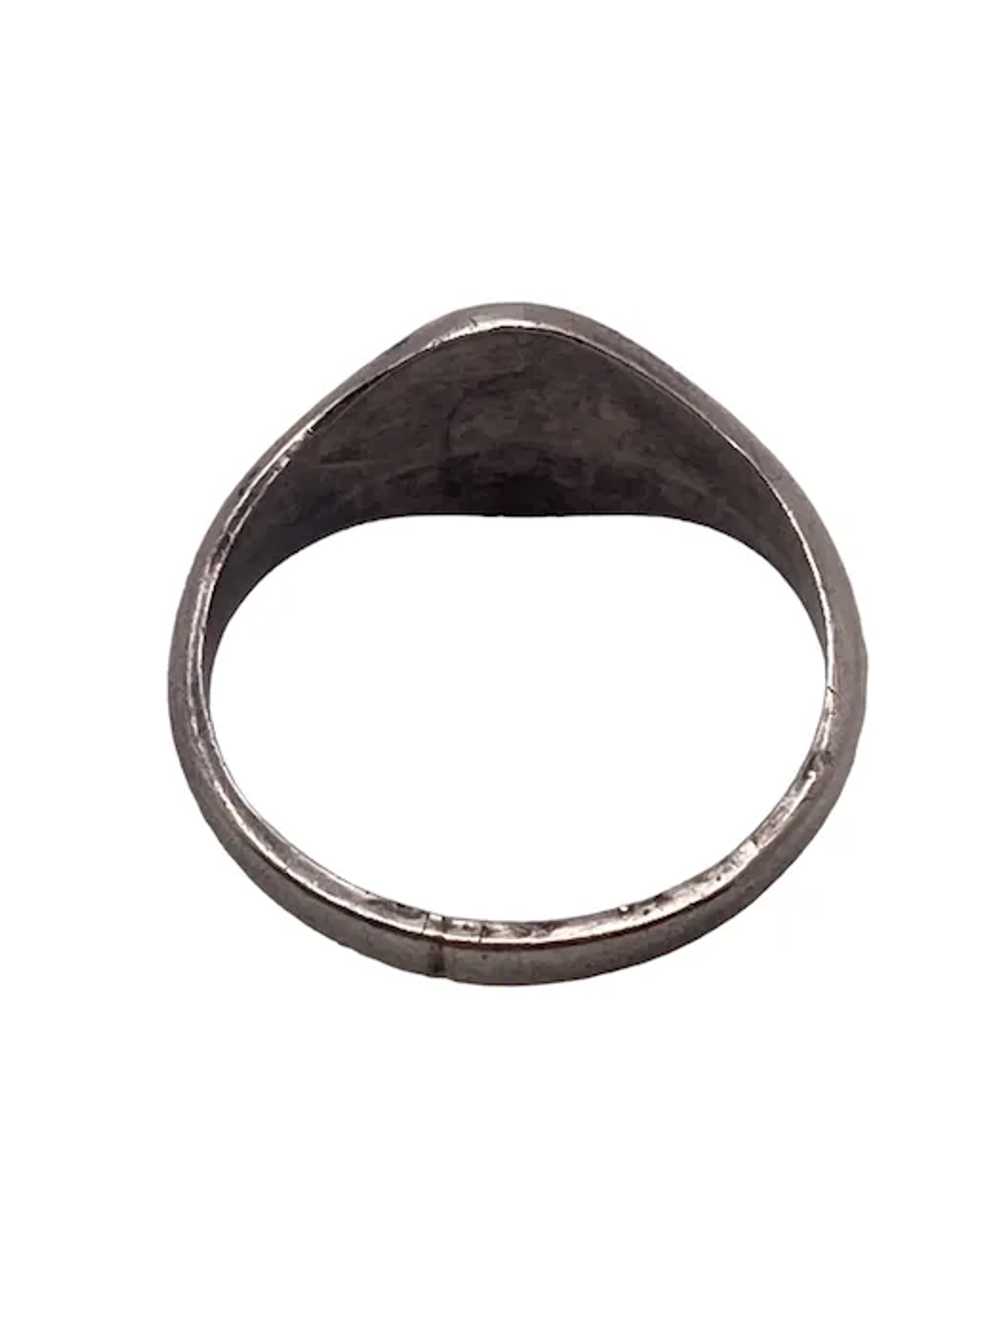 Joseph Esposito Small Sterling Silver Signet Ring - image 7